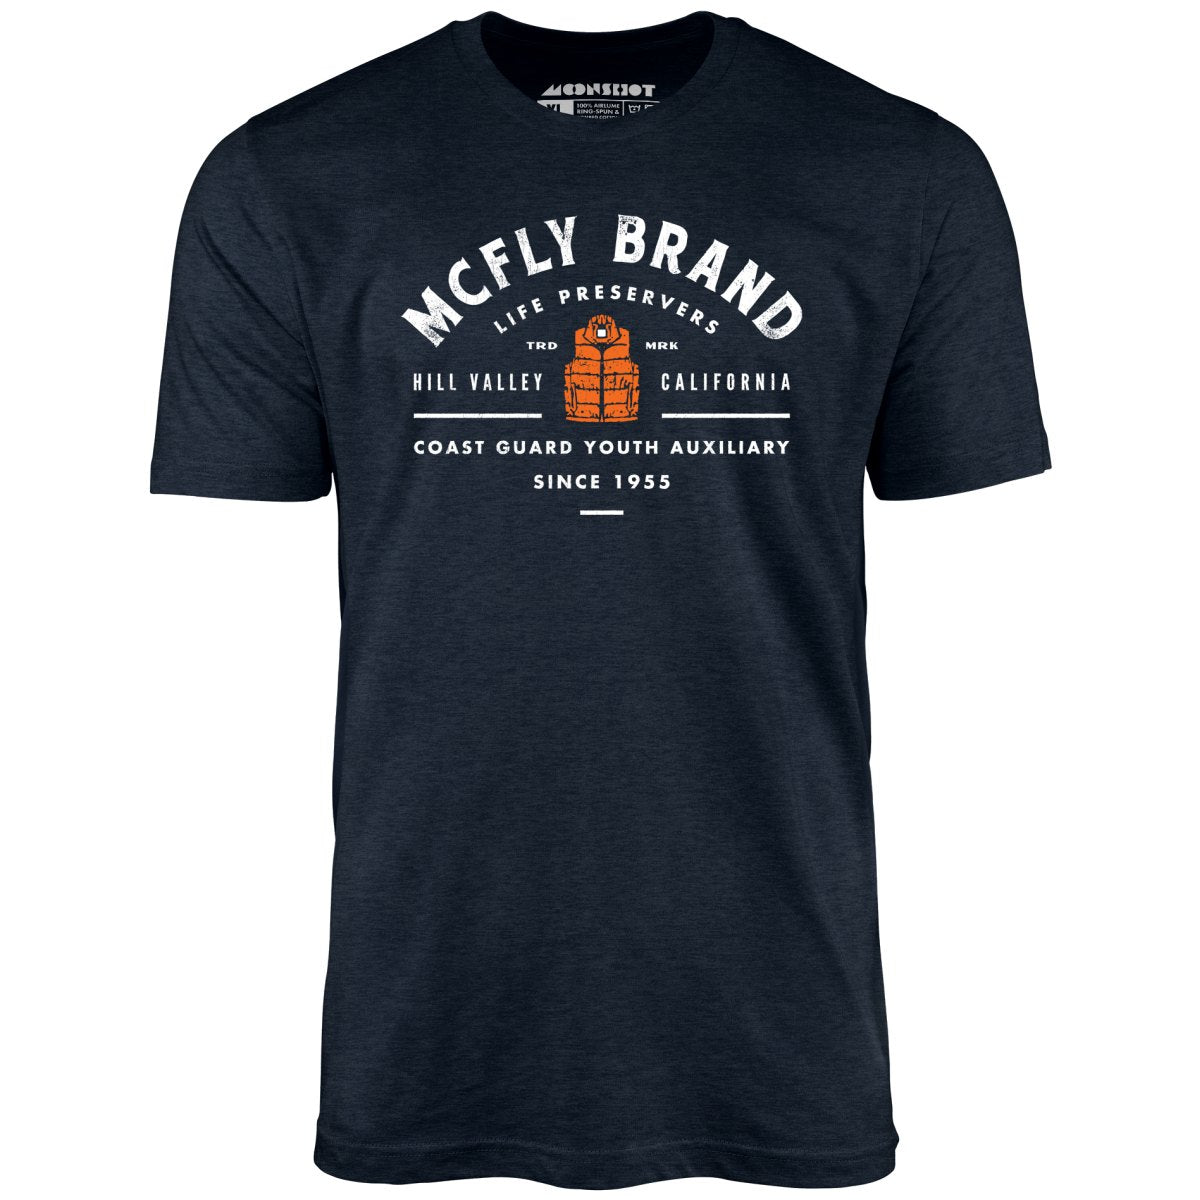 McFly Brand Life Preservers - Unisex T-Shirt